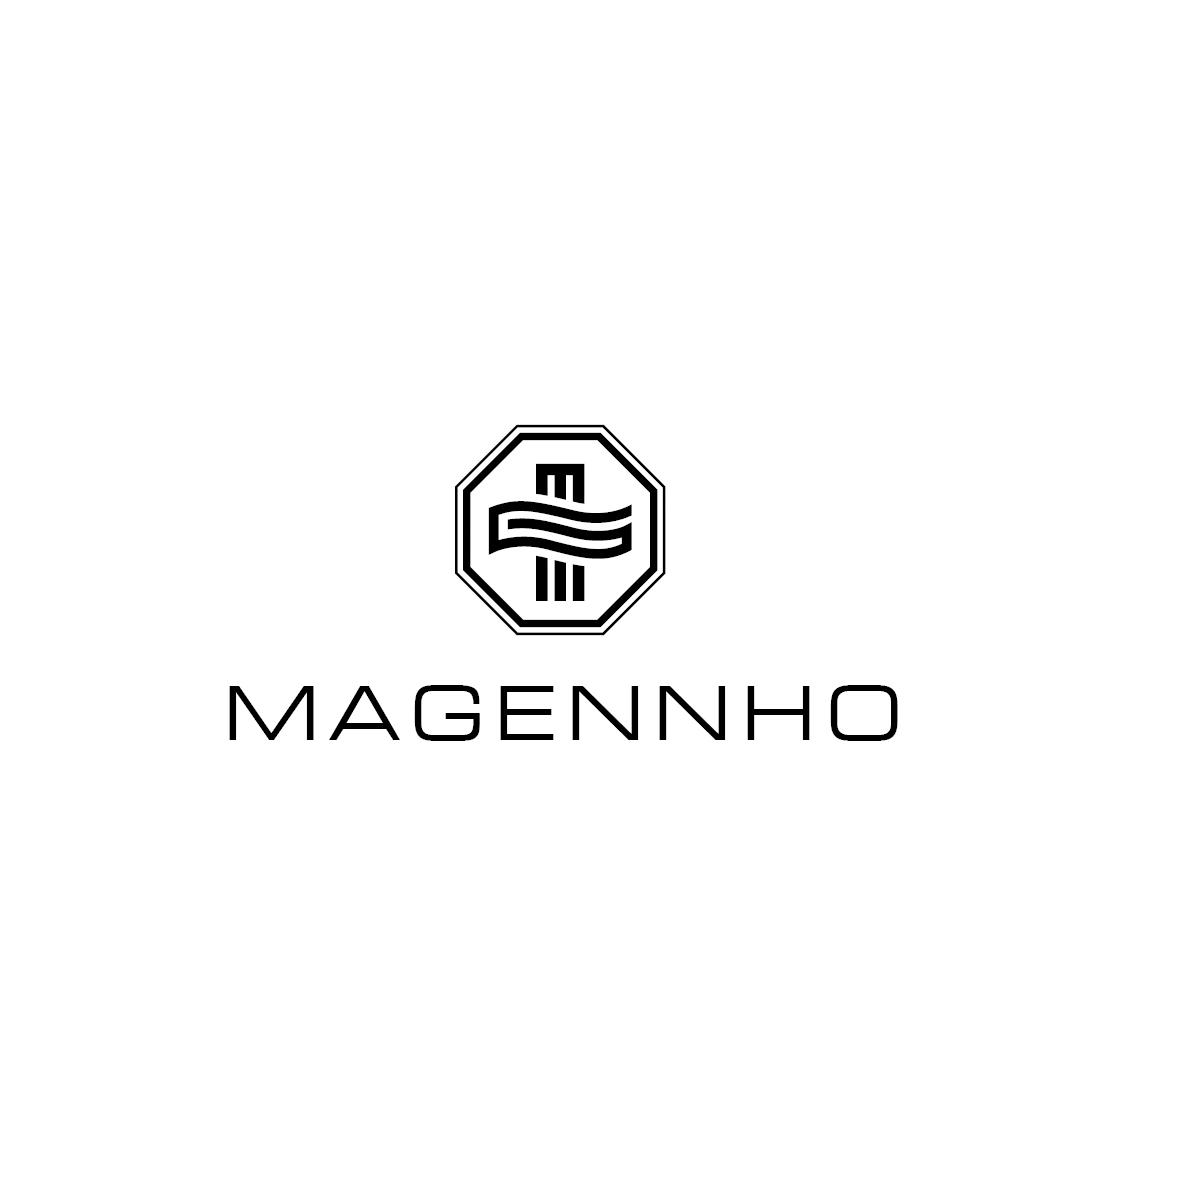 09类-科学仪器MAGENNHO商标转让